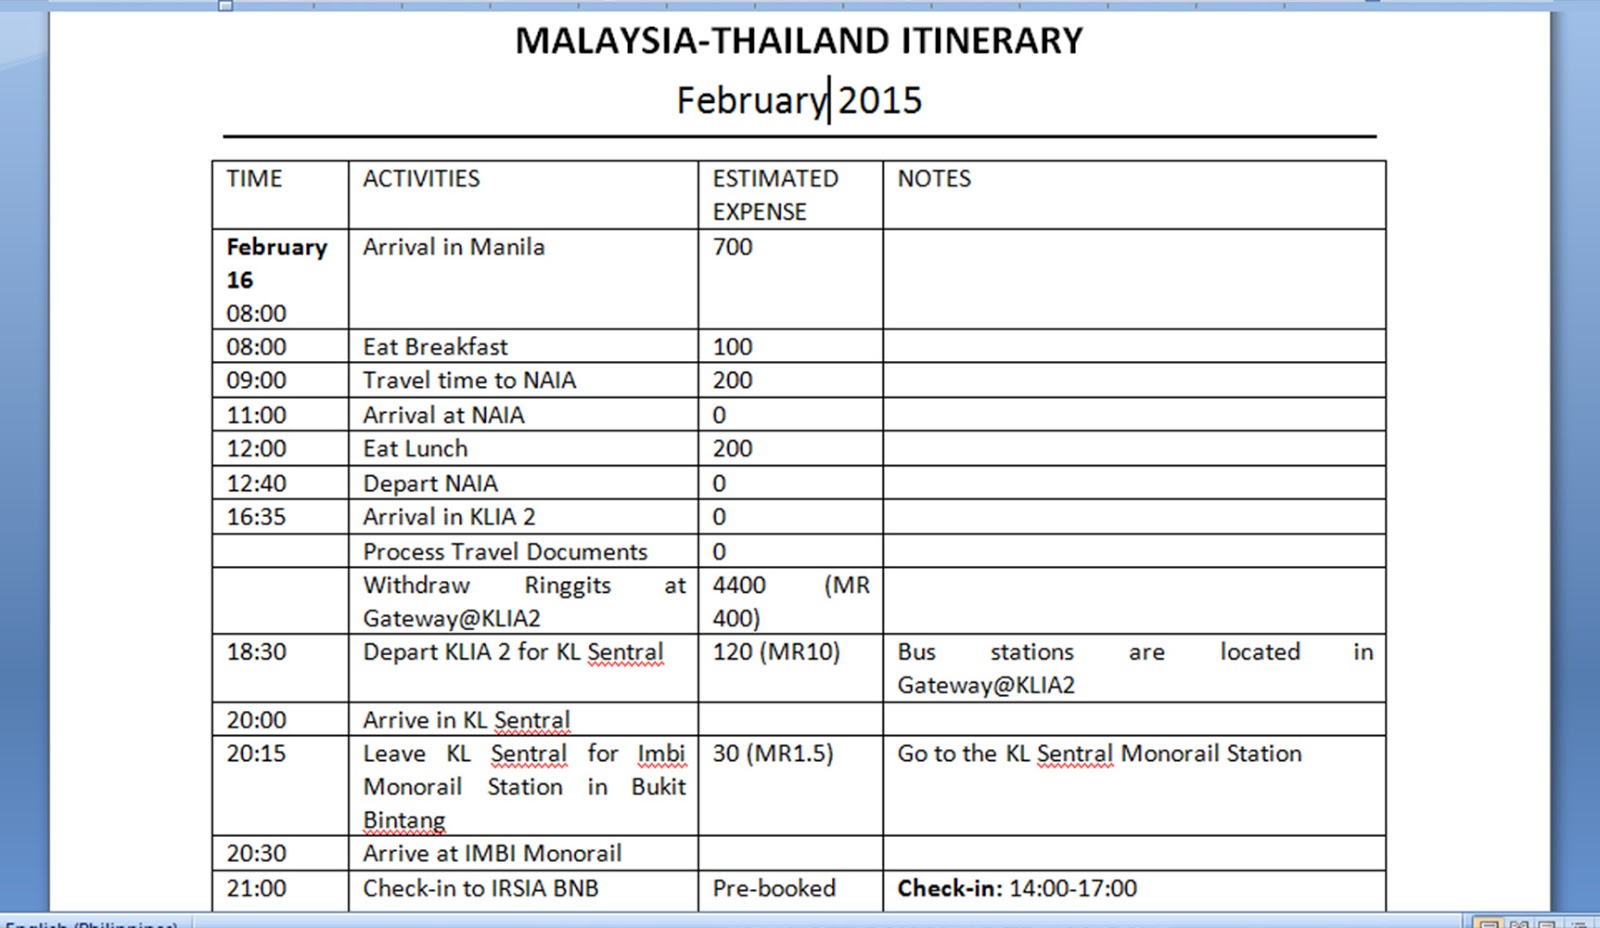 SCREENSHOT OF MY MALAYSIA-THAILAND ITINERARY